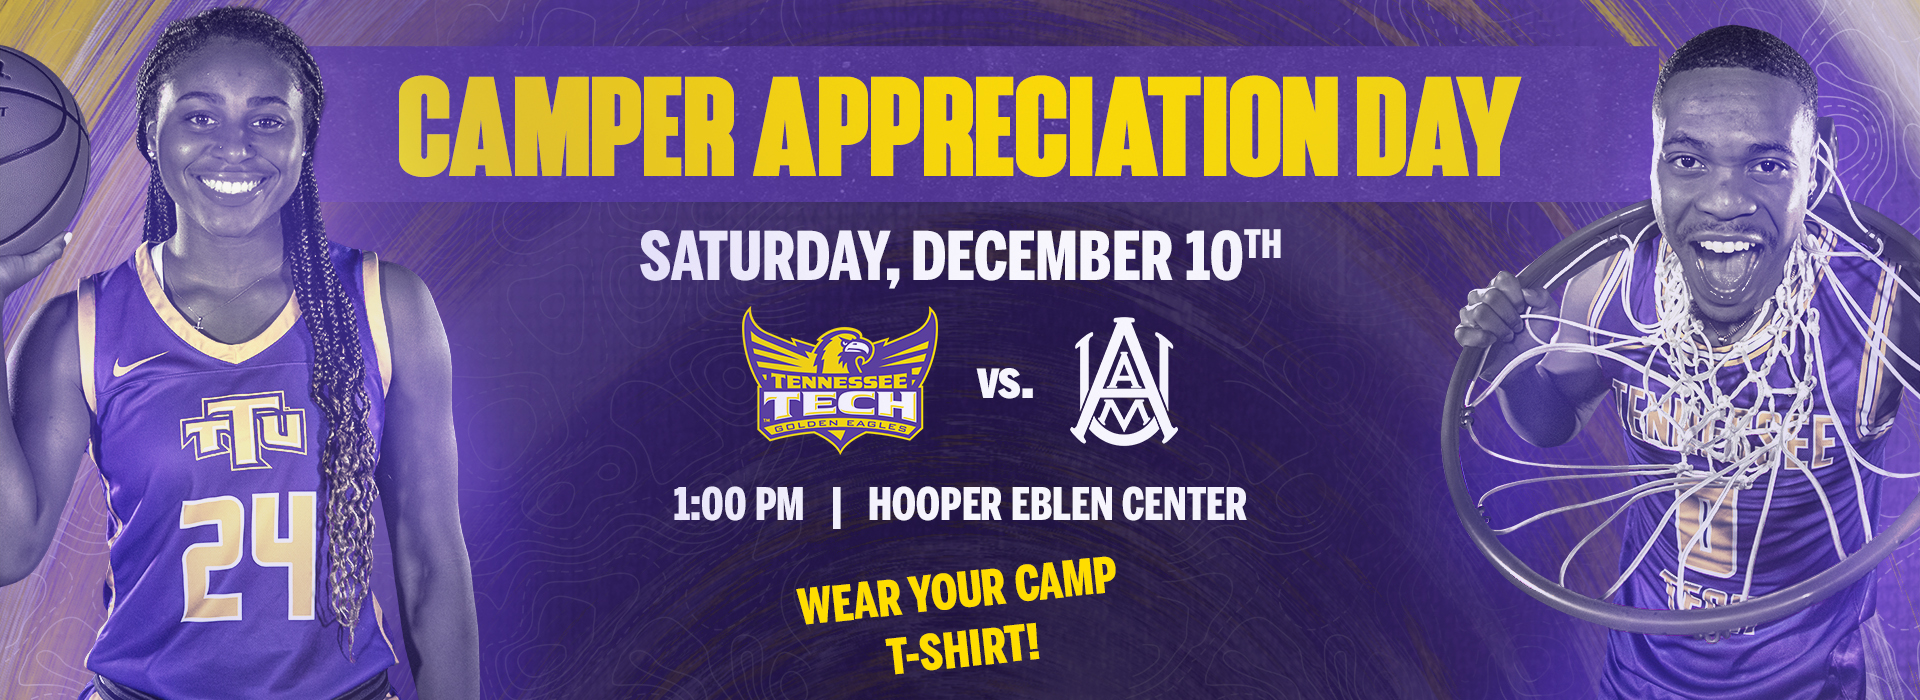 Camper Appreciation Day set for Tech women's basketball contest Saturday, Dec. 10